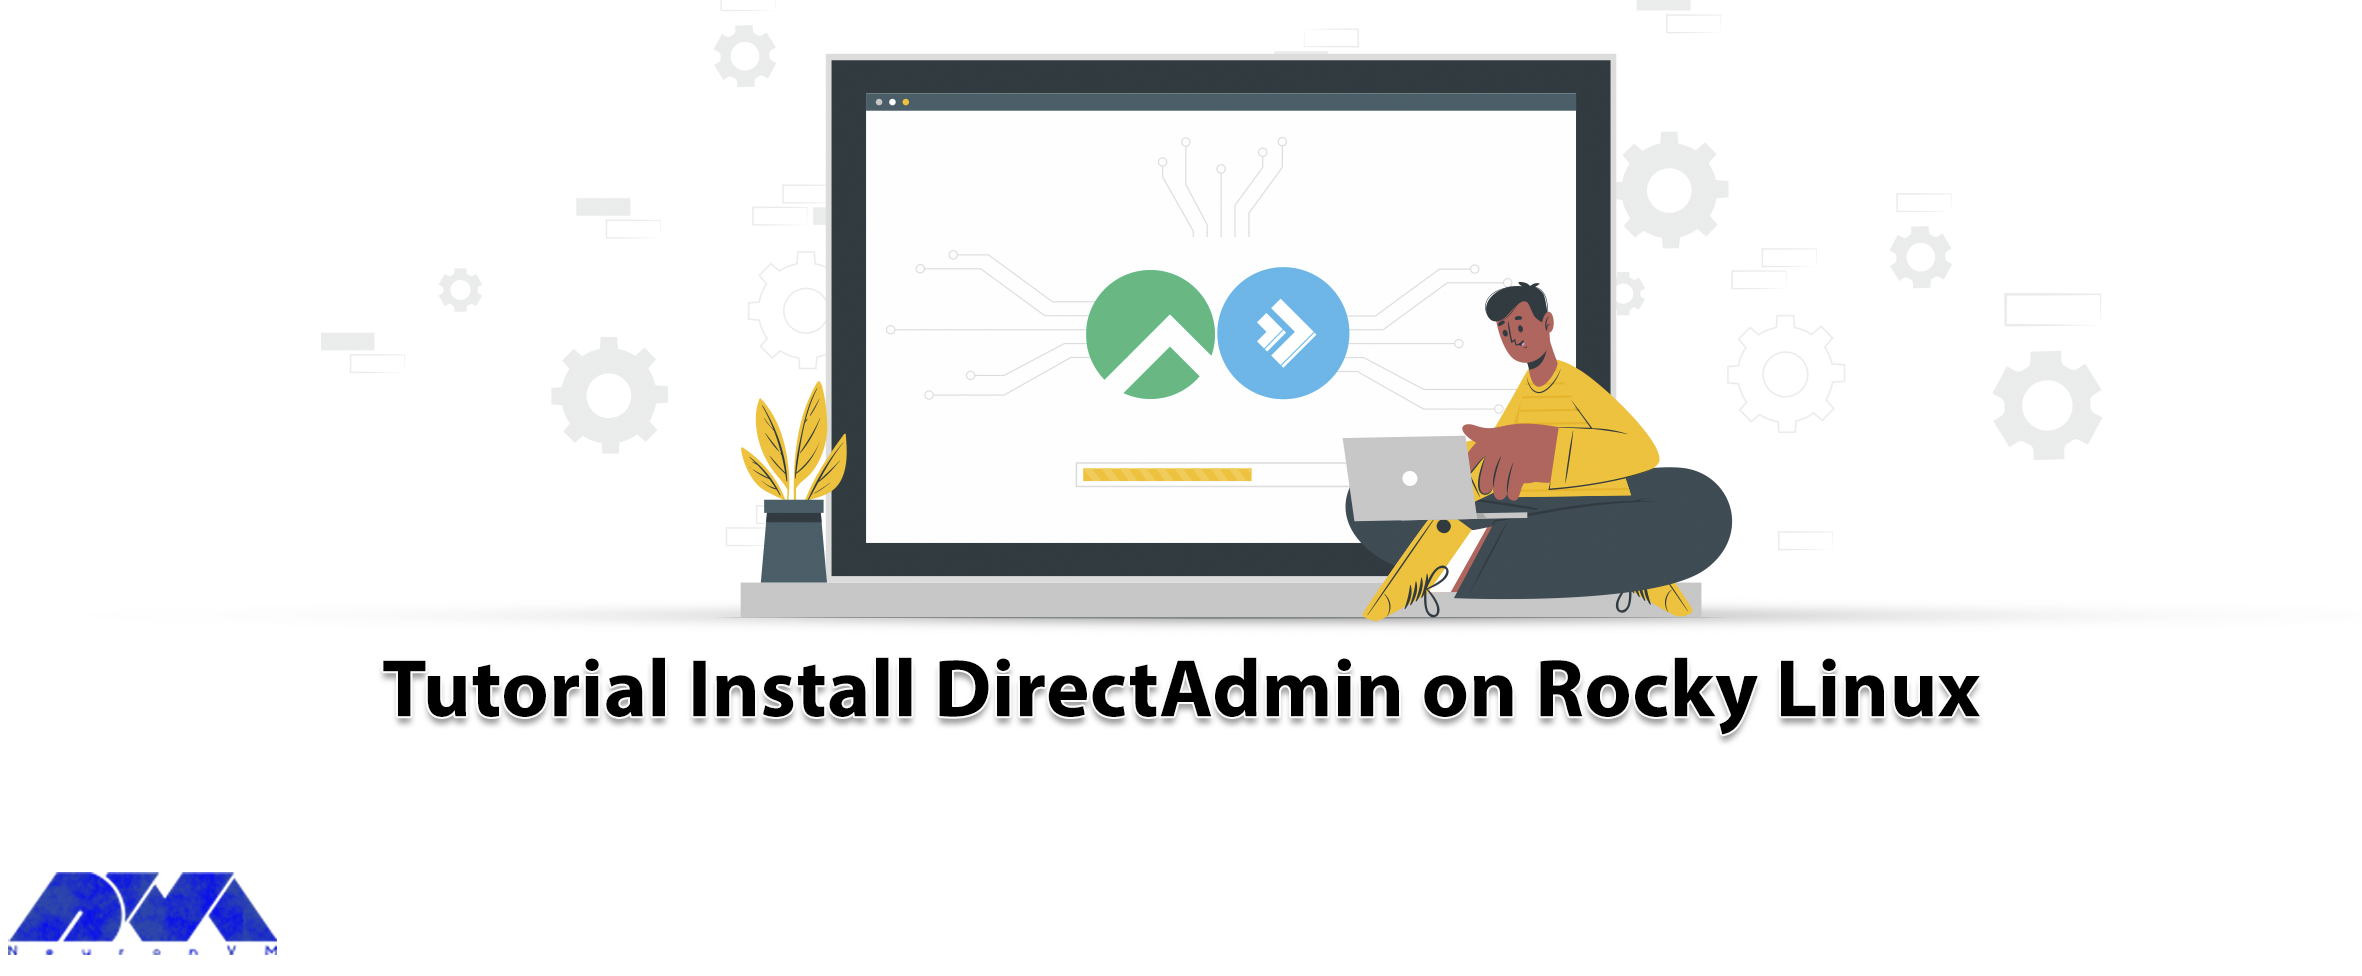 Tutorial Install DirectAdmin on Rocky Linux